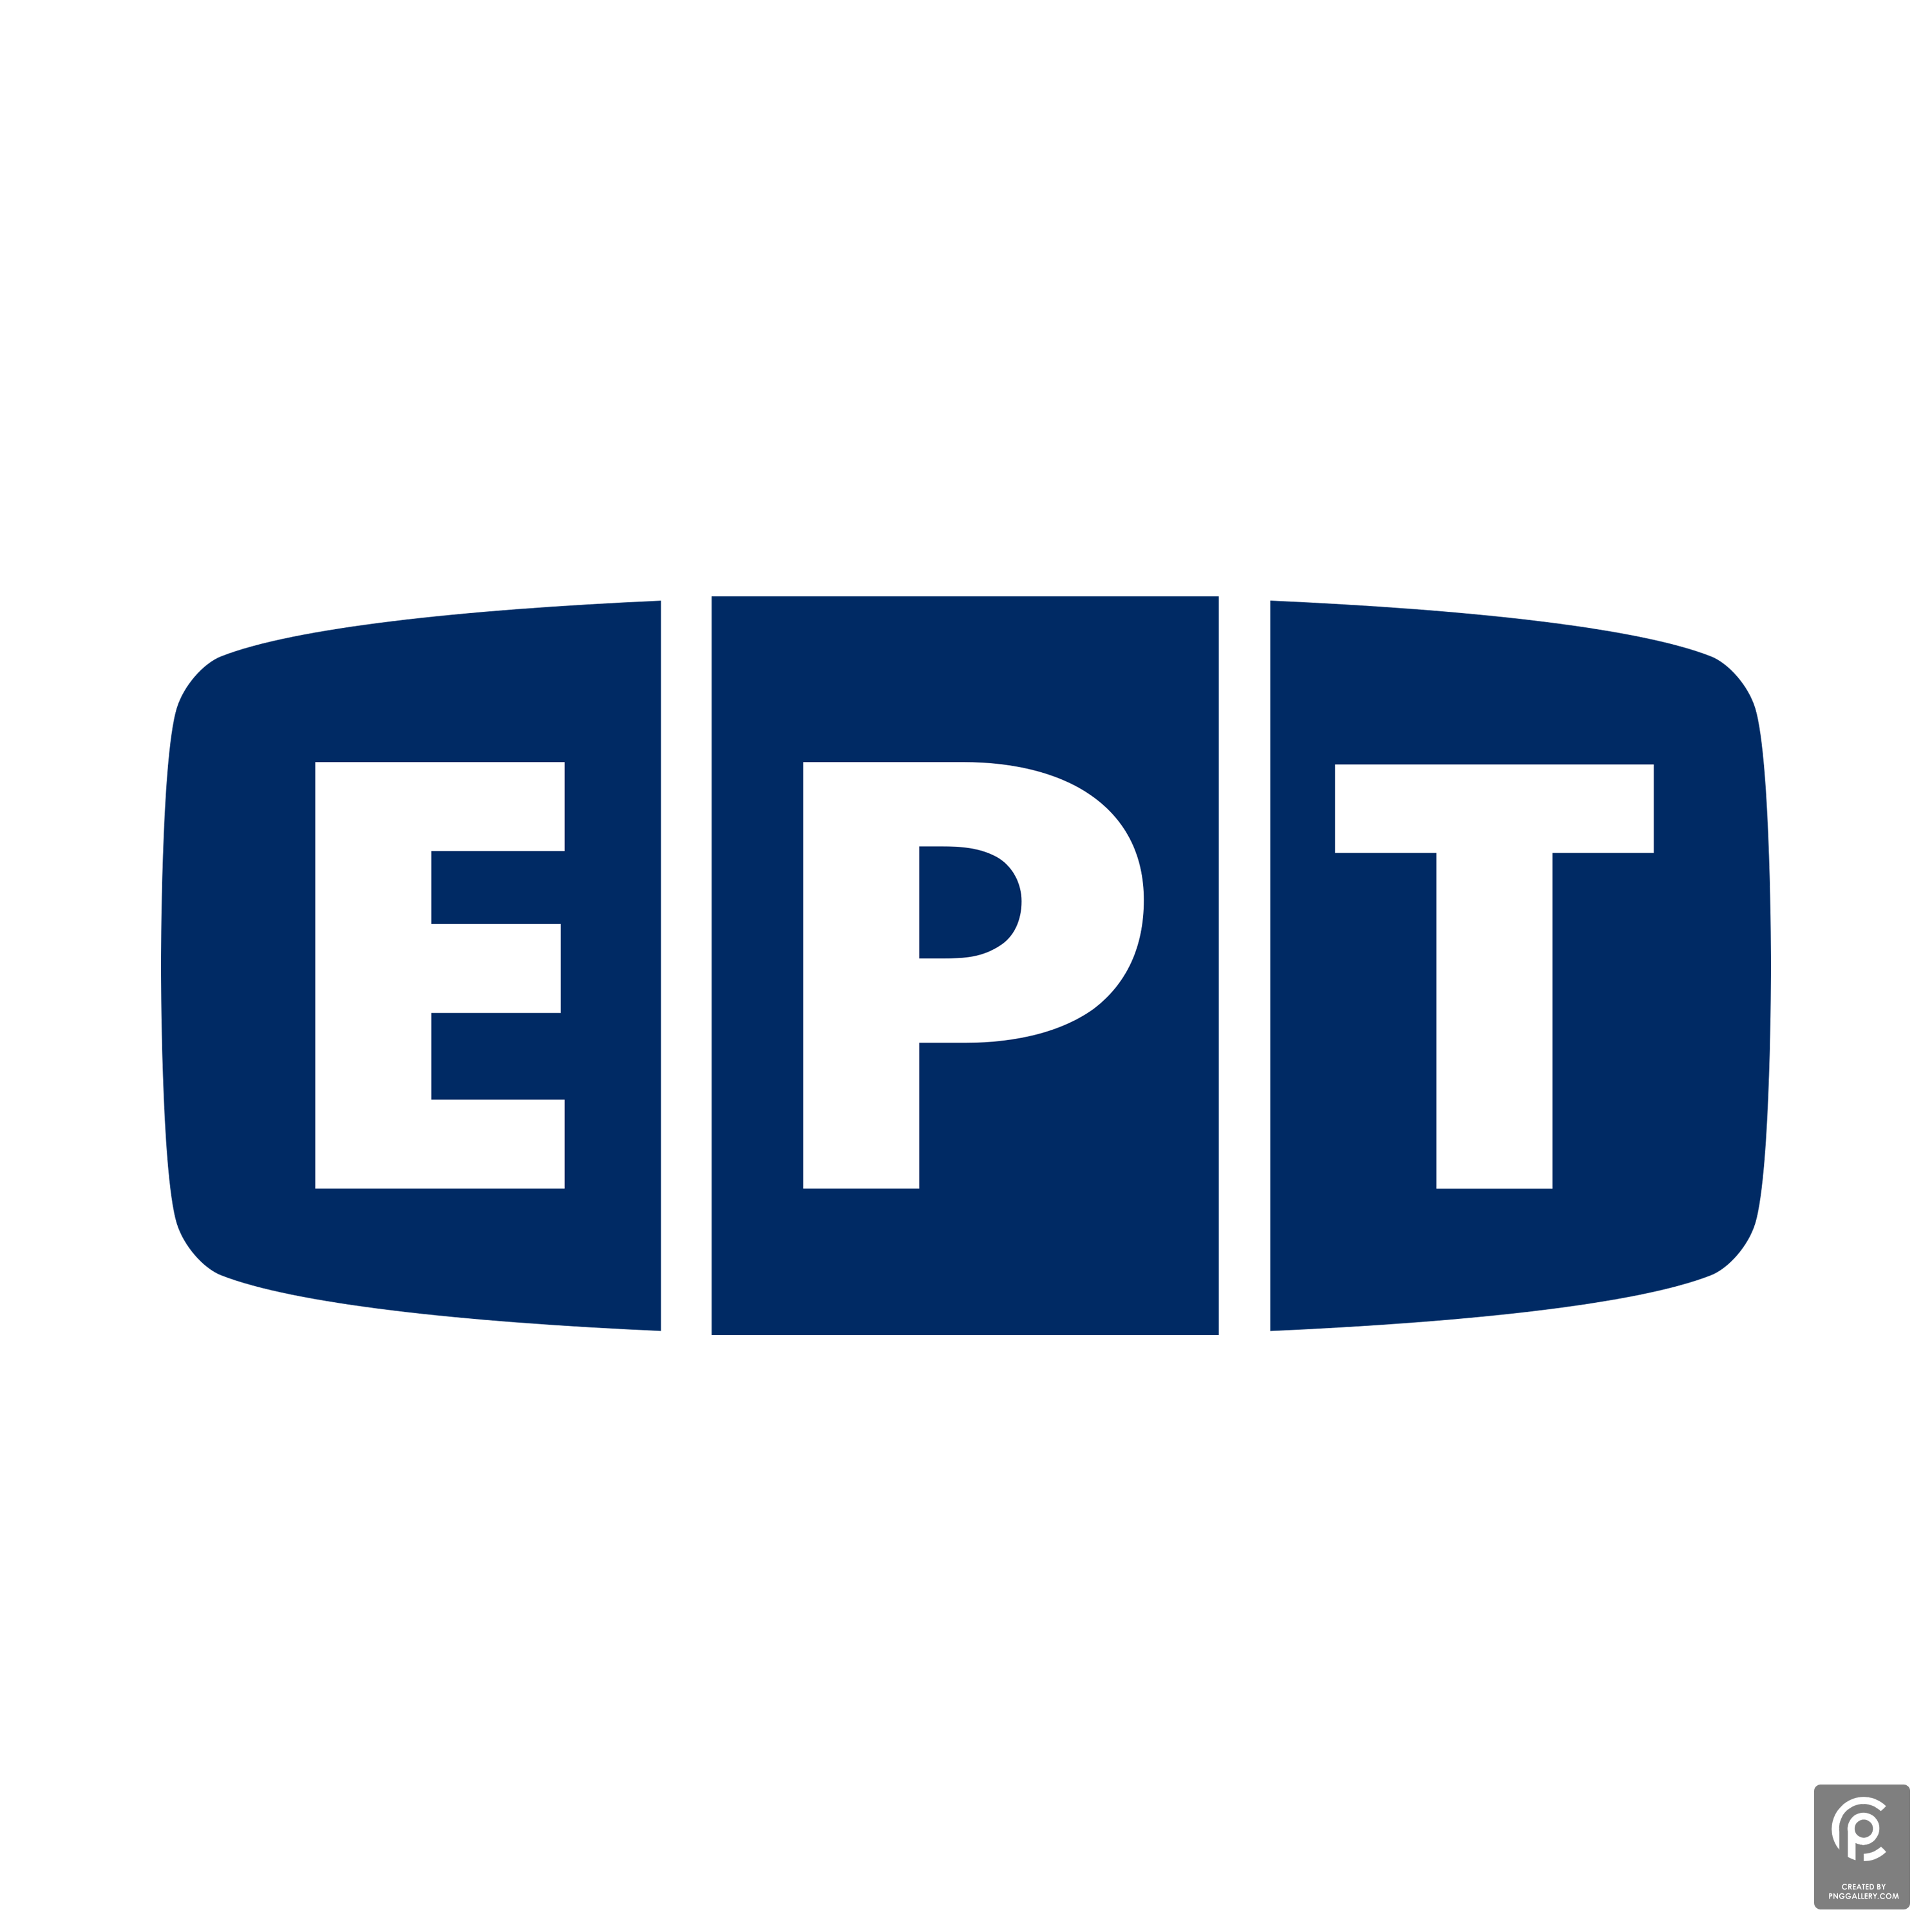 EPT Logo Transparent Picture